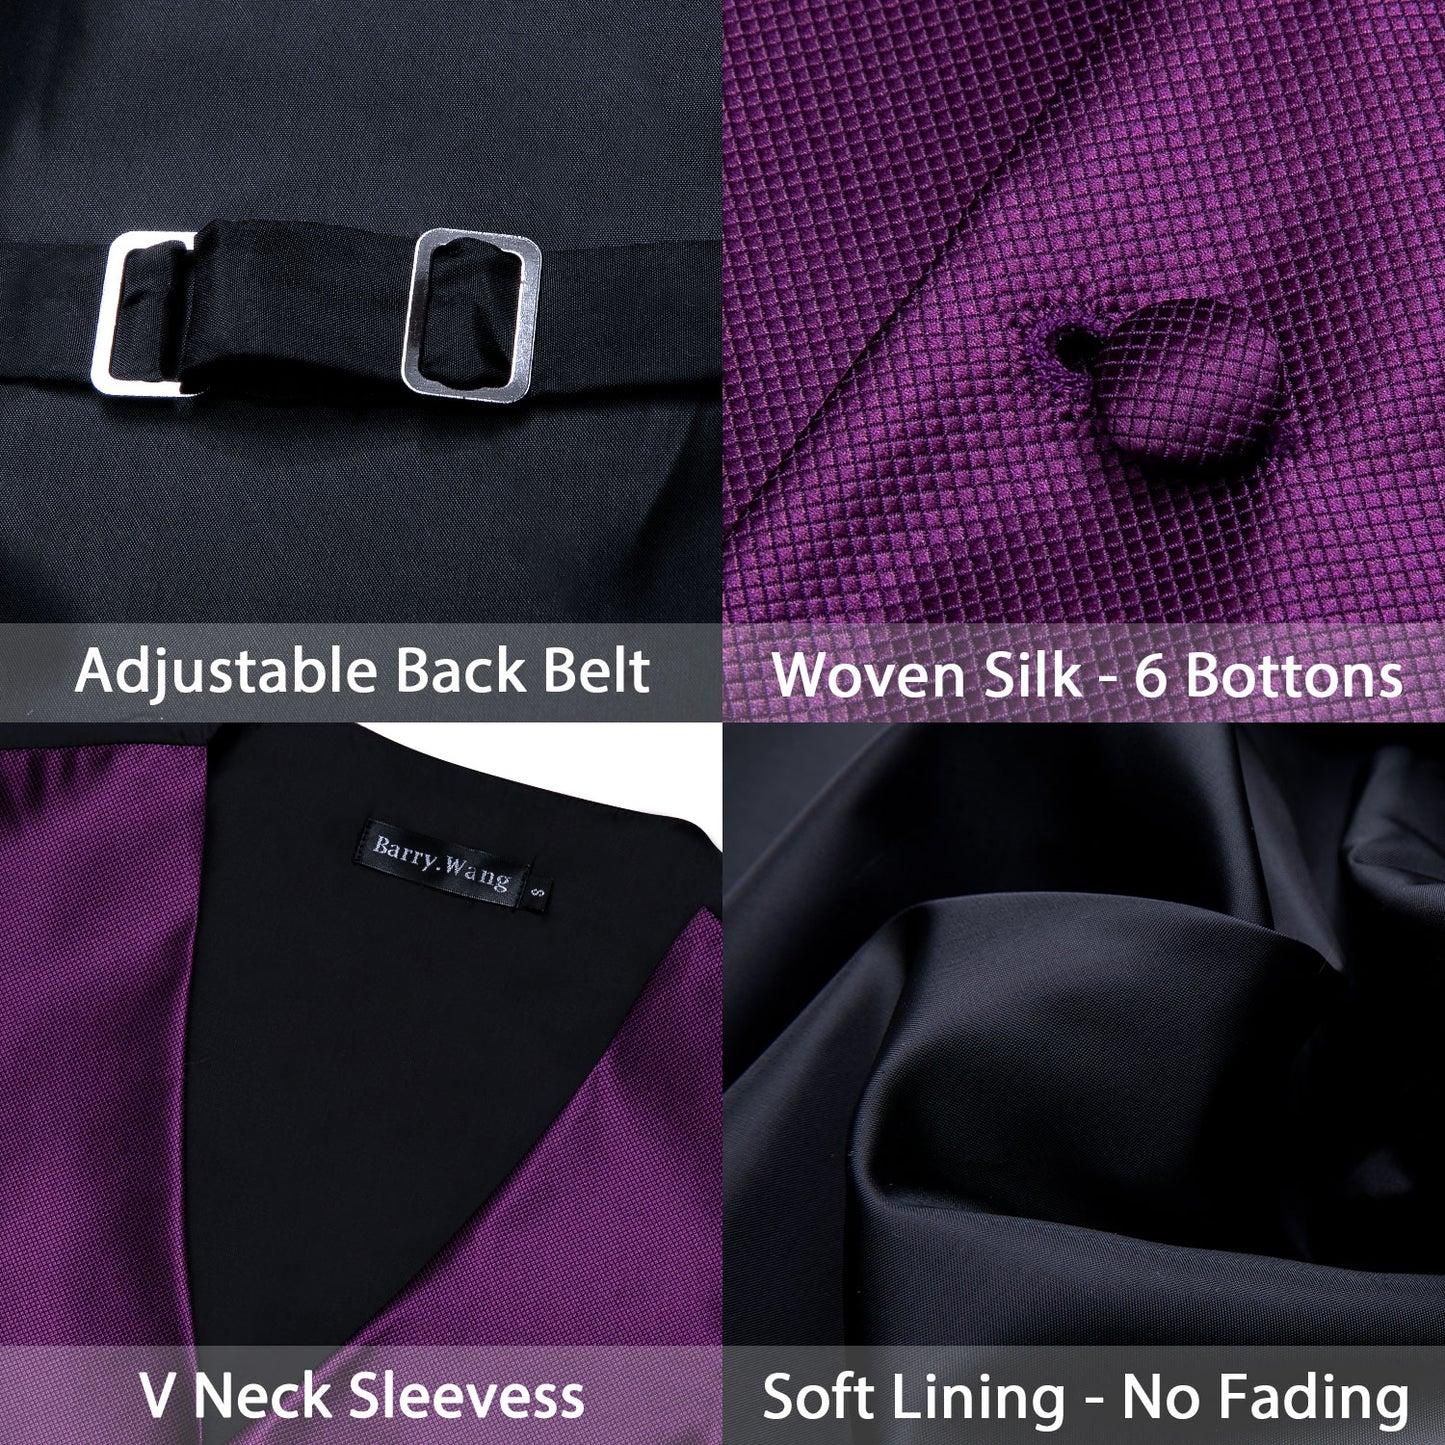 Designer Waistcoat Silky Novelty Vest Satin Plum